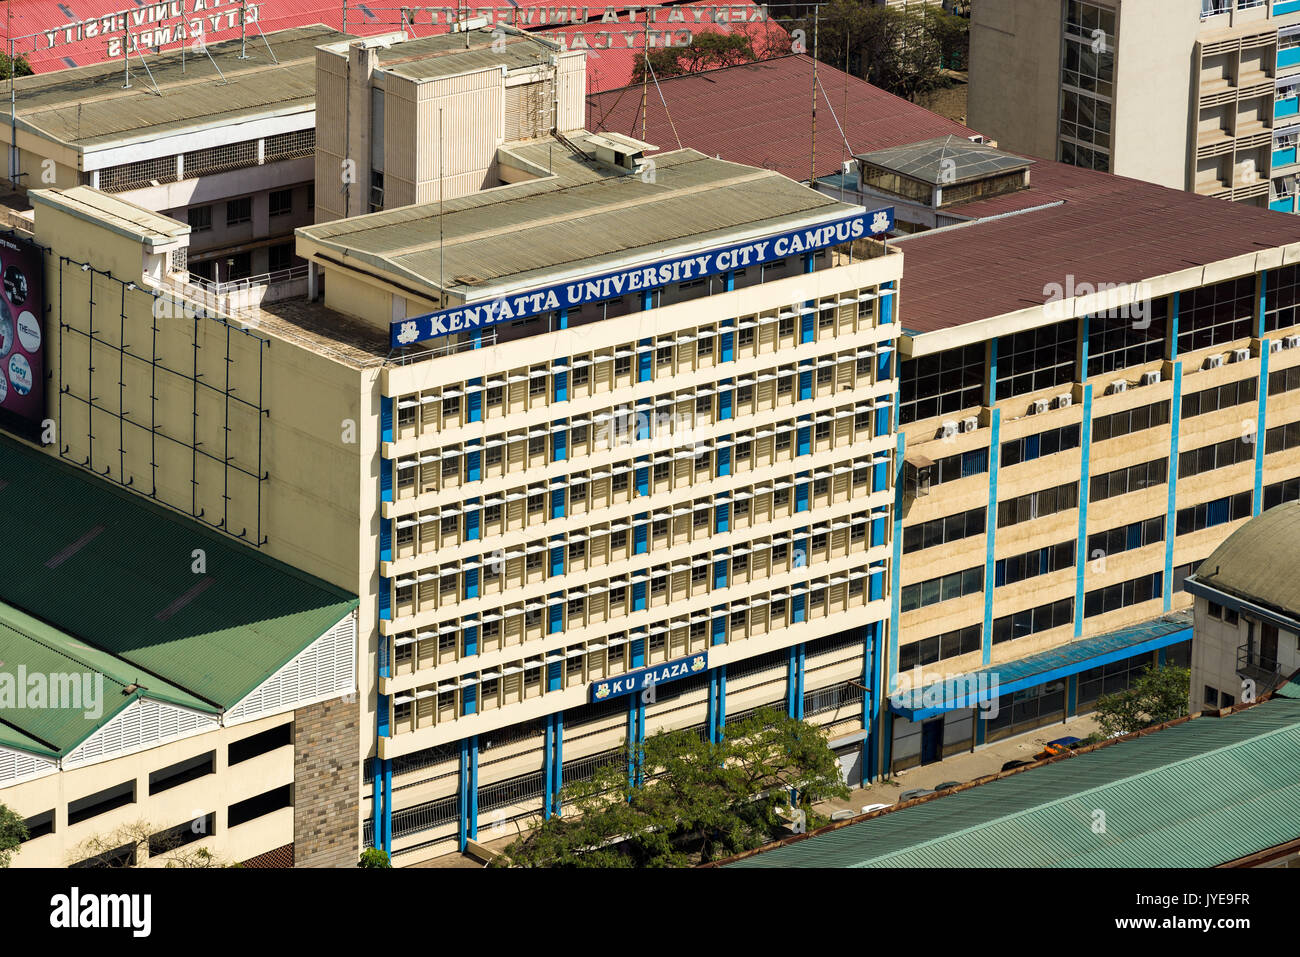 Kenyatta University City Campus Building, Nairobi, Kenya Banque D'Images